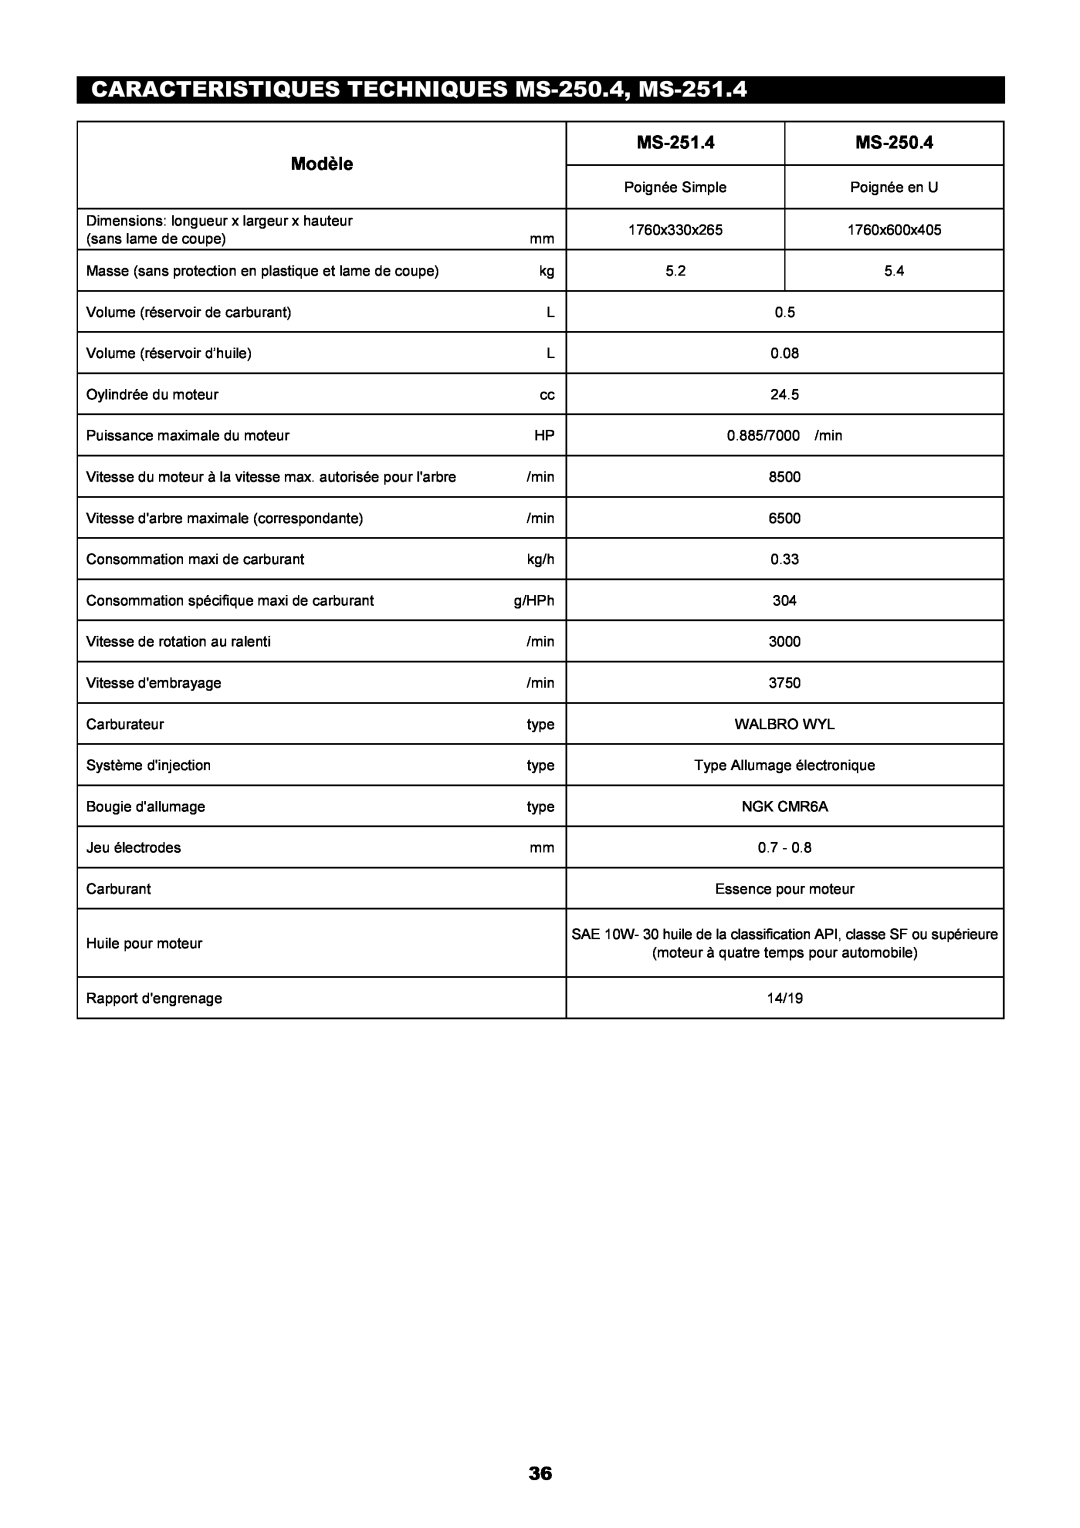 Dolmar instruction manual CARACTERISTIQUES TECHNIQUES MS-250.4, MS-251.4, 8500, 6500, 3000, 3750 